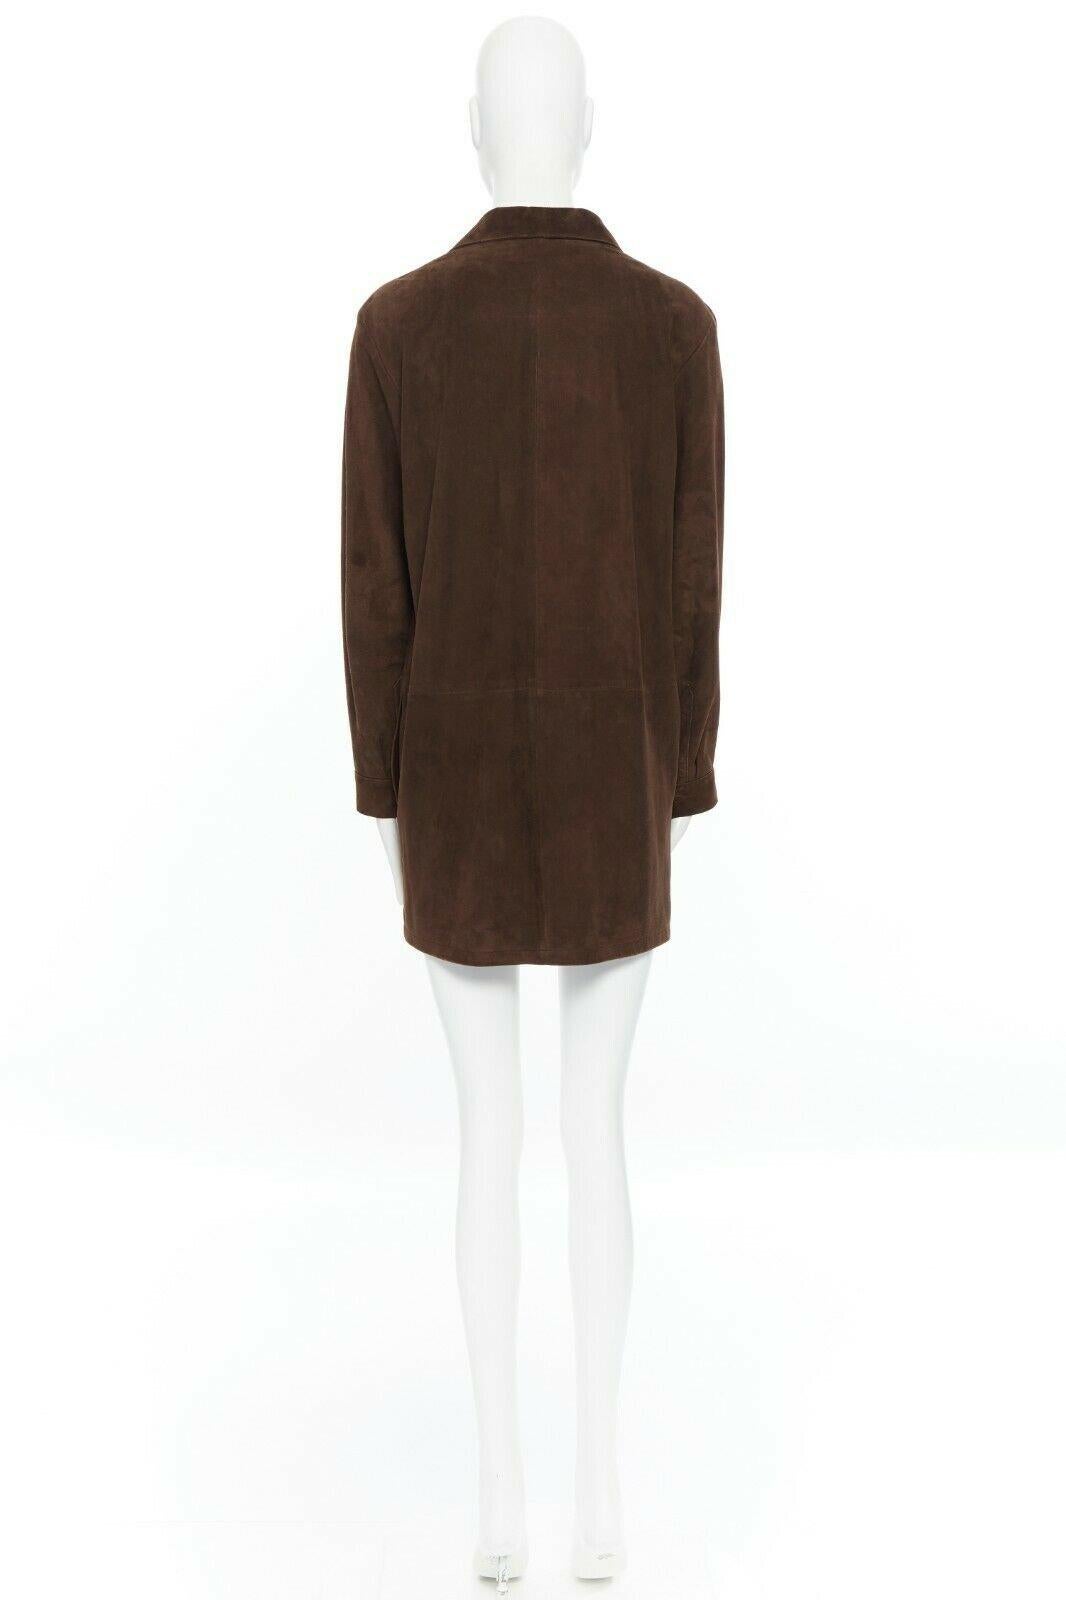 HERMES MARTIN MARGIELA vintage brown suede peak spread collar long shirt FR38 1